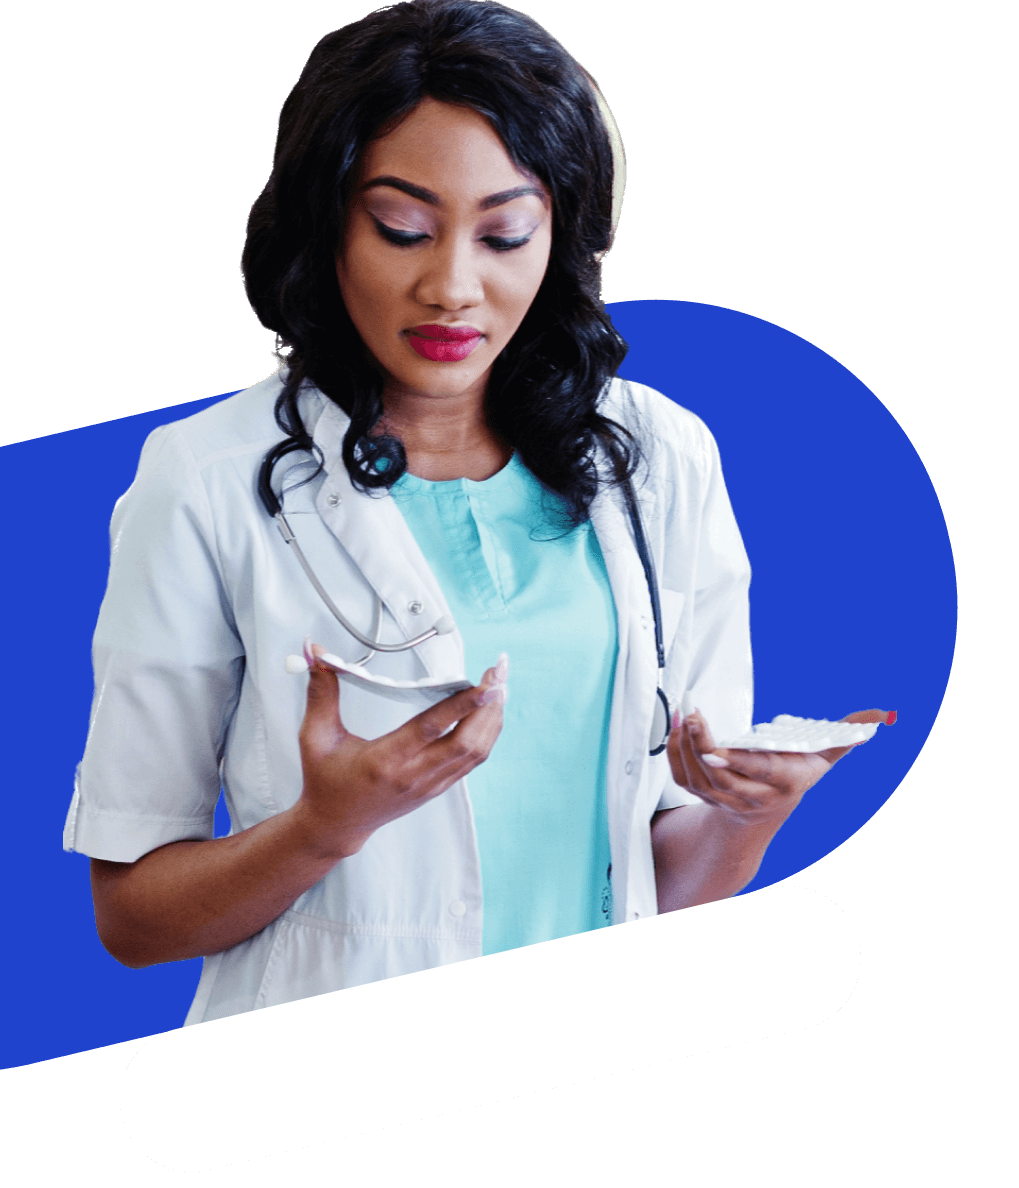 female pharmacist checking prescription